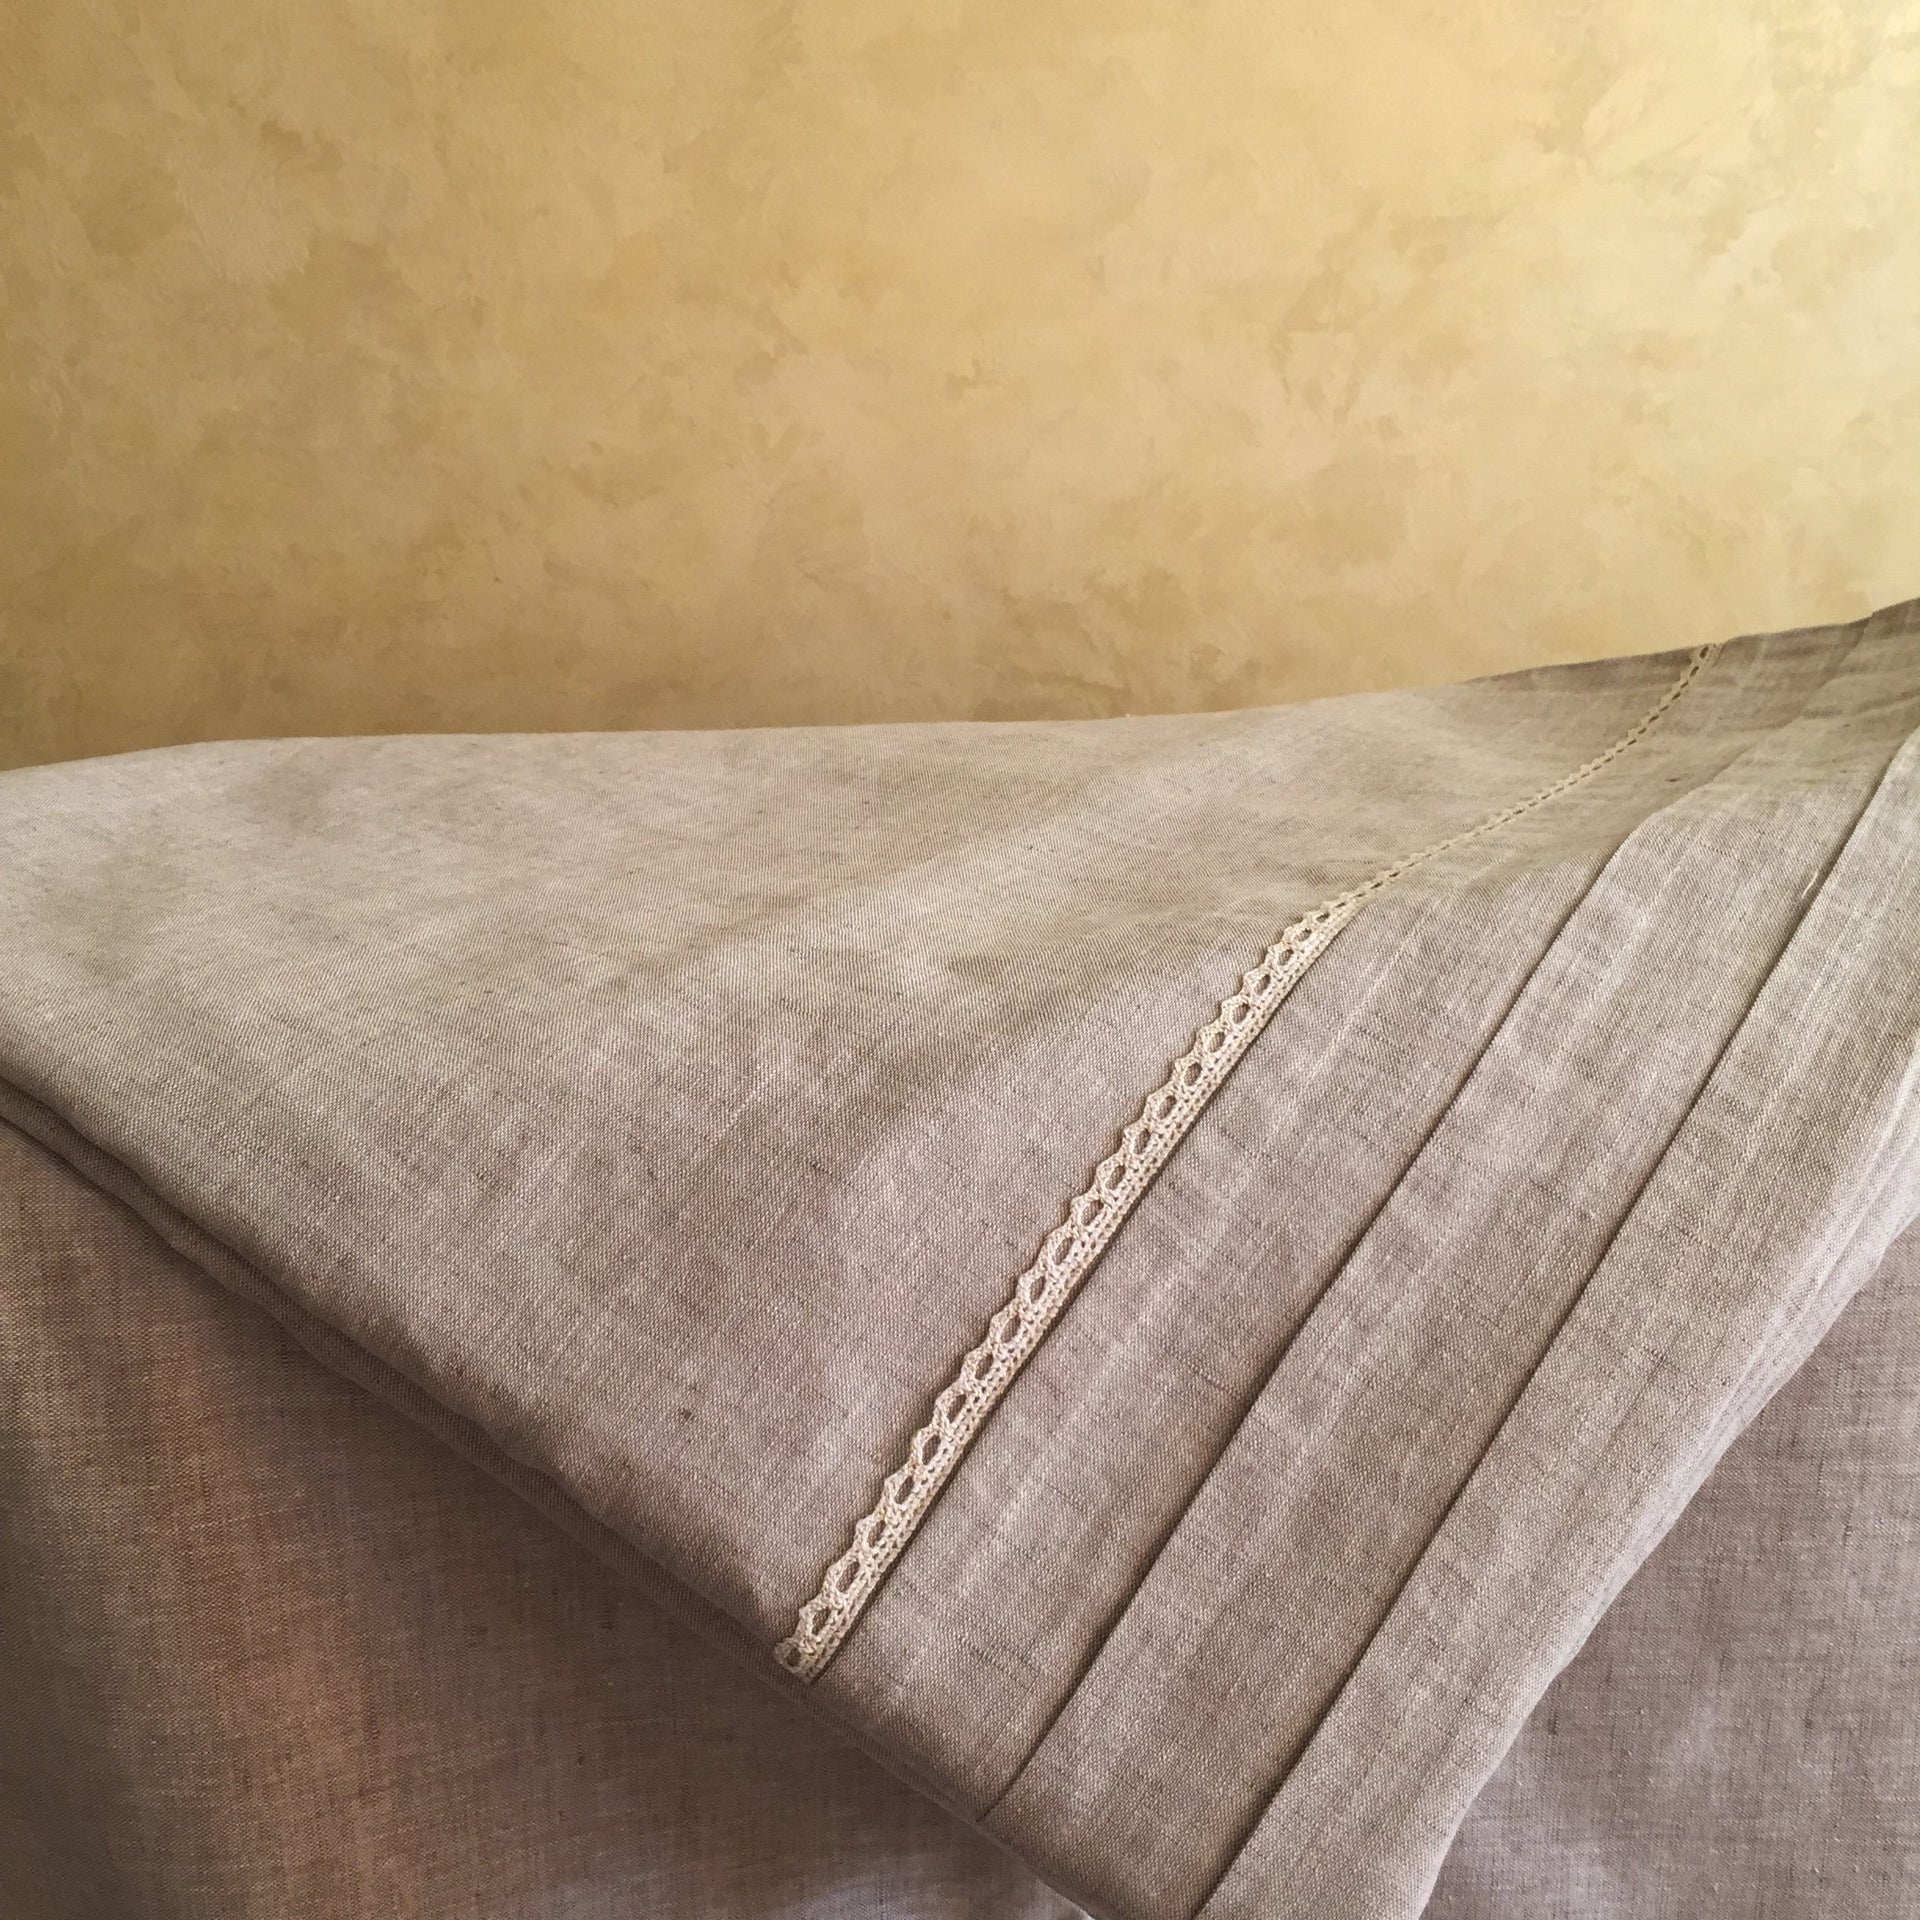 Linen Duvet Cover with Pleats 